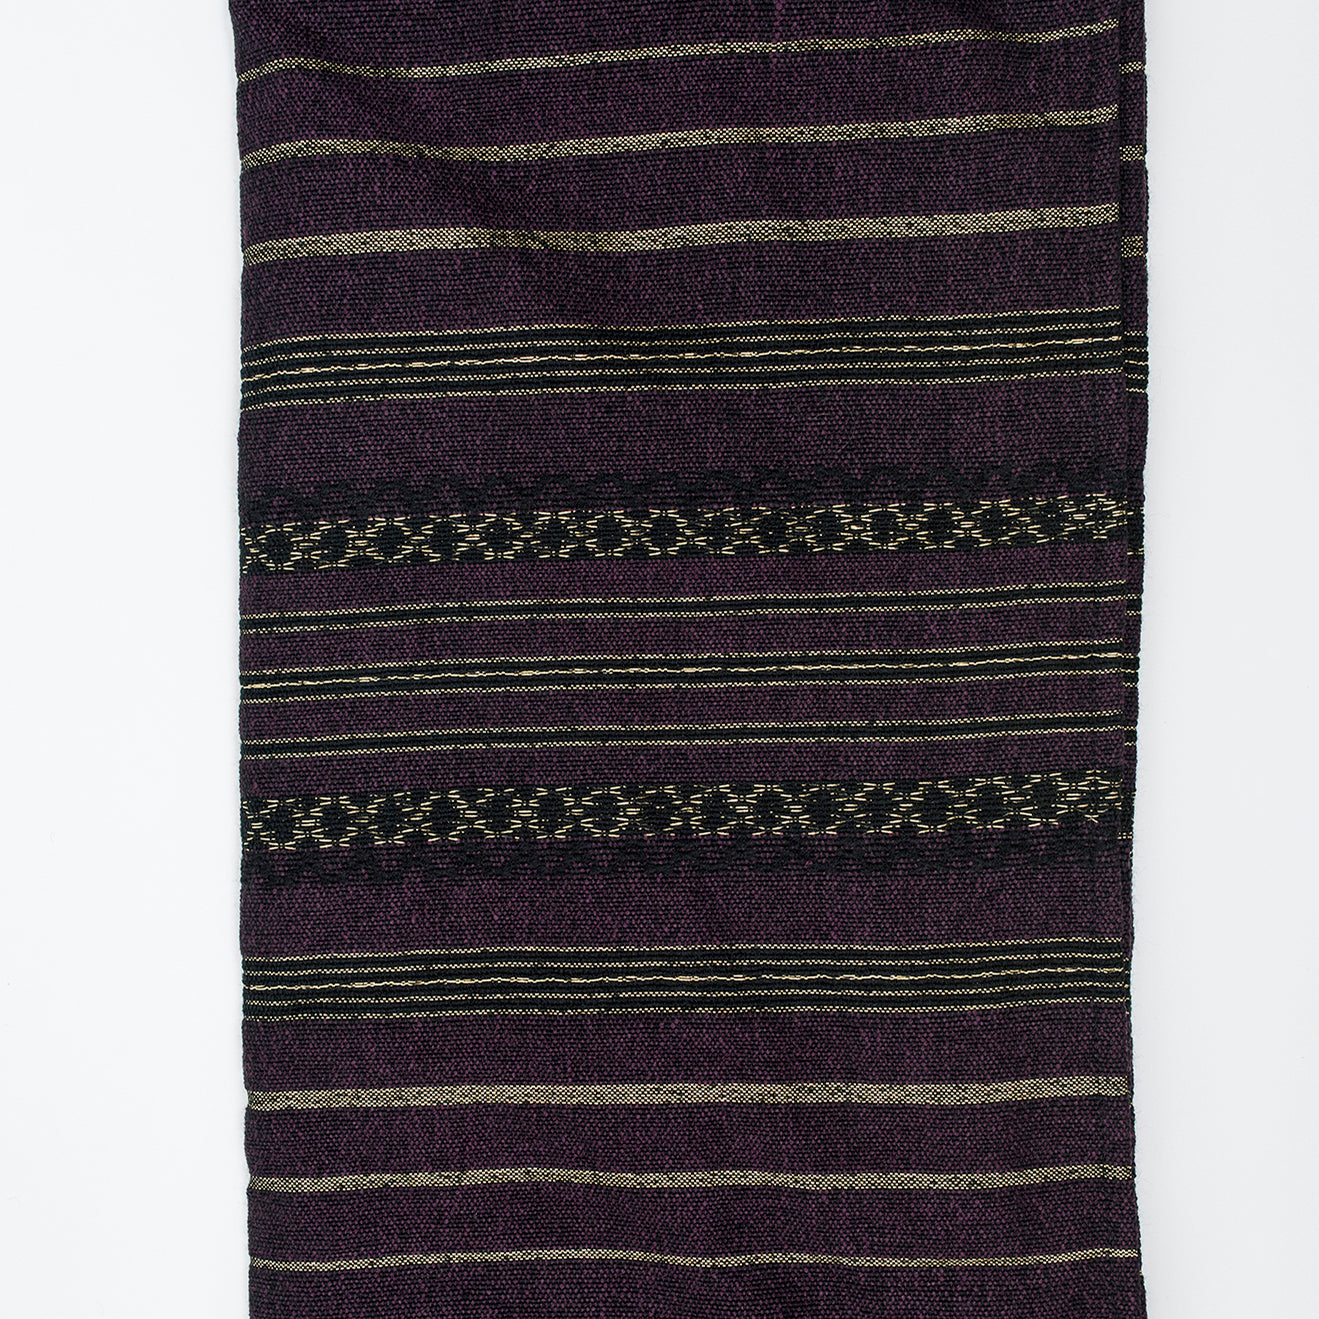 Hagar - Wool Tallit - Black and Gold on Purple